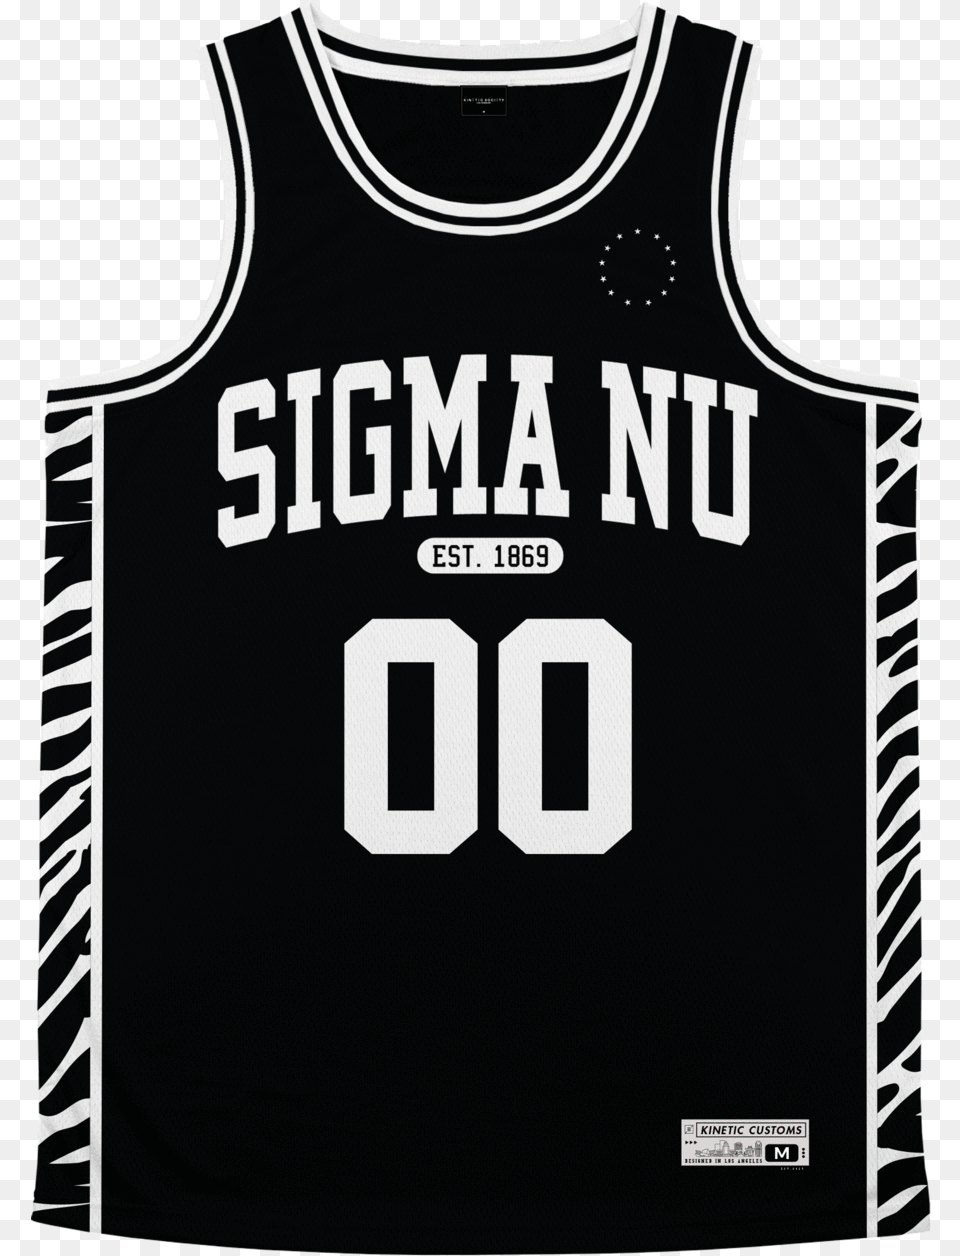 Sigma Nu Zebra Flex Basketball Jersey Jersey, Clothing, Shirt, Tank Top, Person Png Image